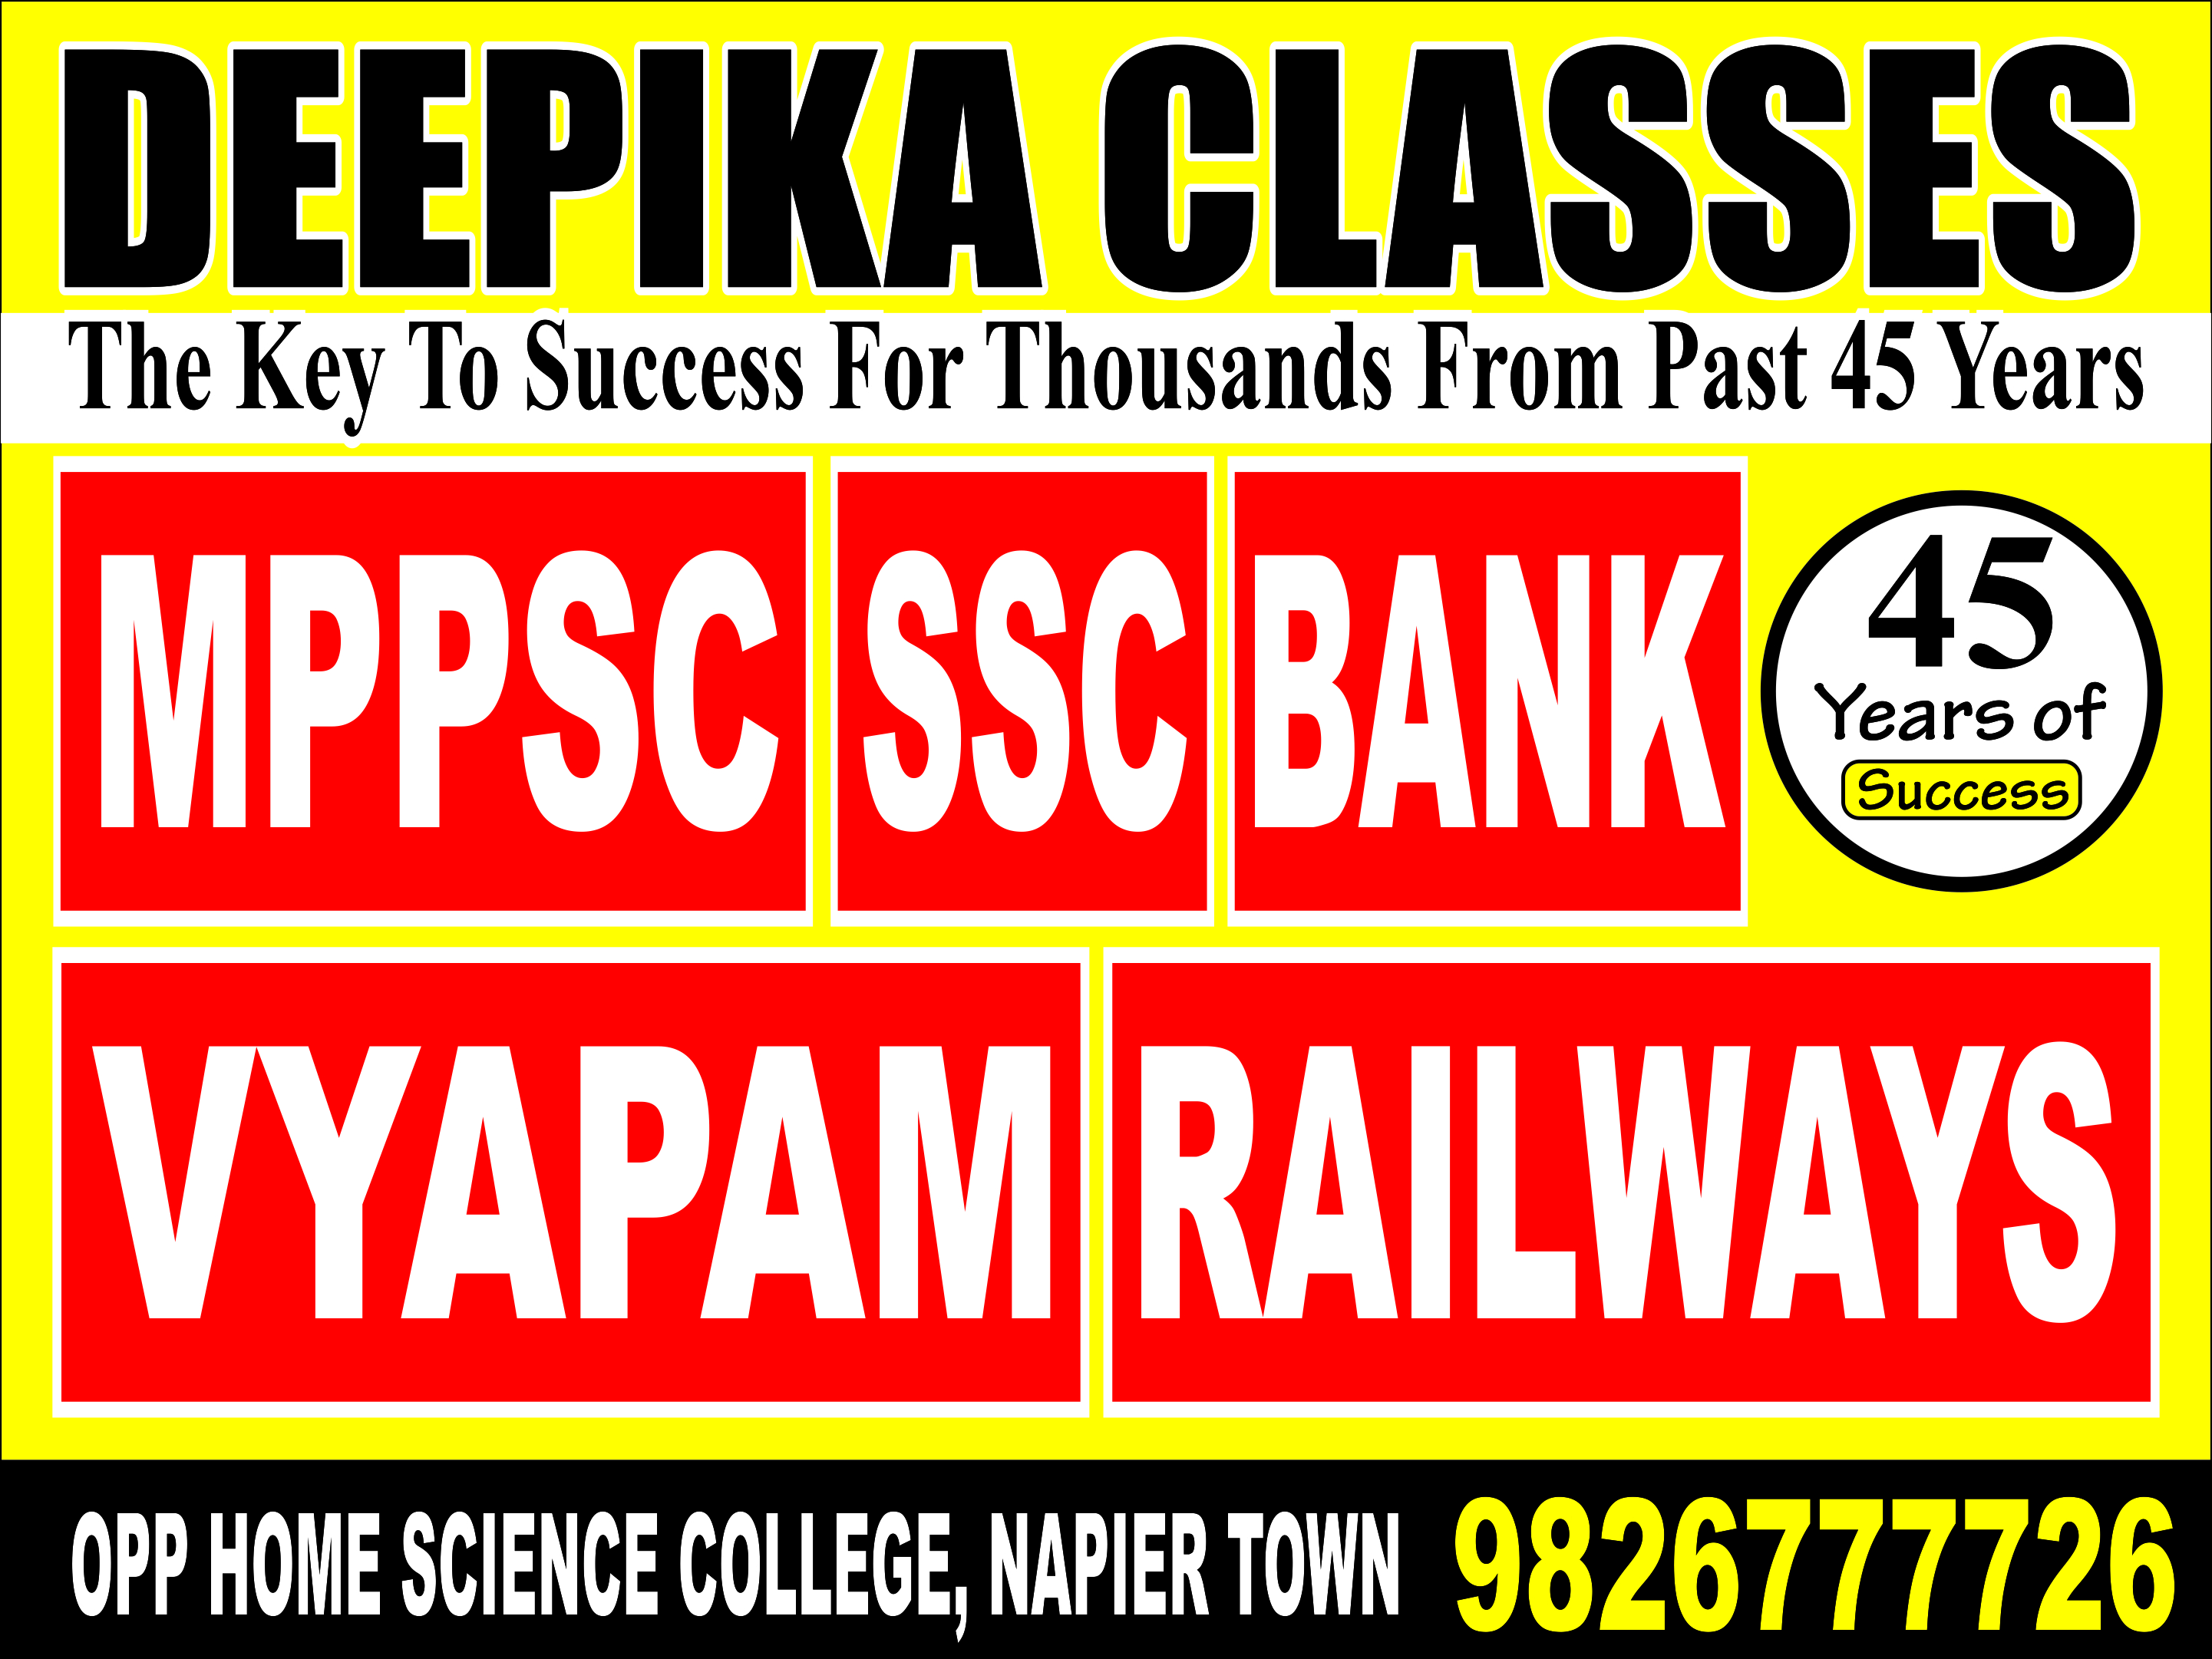 MPPSC Classes in Jabalpur | Deepika Classes | MPPSC Classes in Jabalpur, best MPPSC Classes in Jabalpur, MPPSC Coaching in jabalpur, MPPSC coaching classes in jabalpur, mppsc jabalpur - GL92582